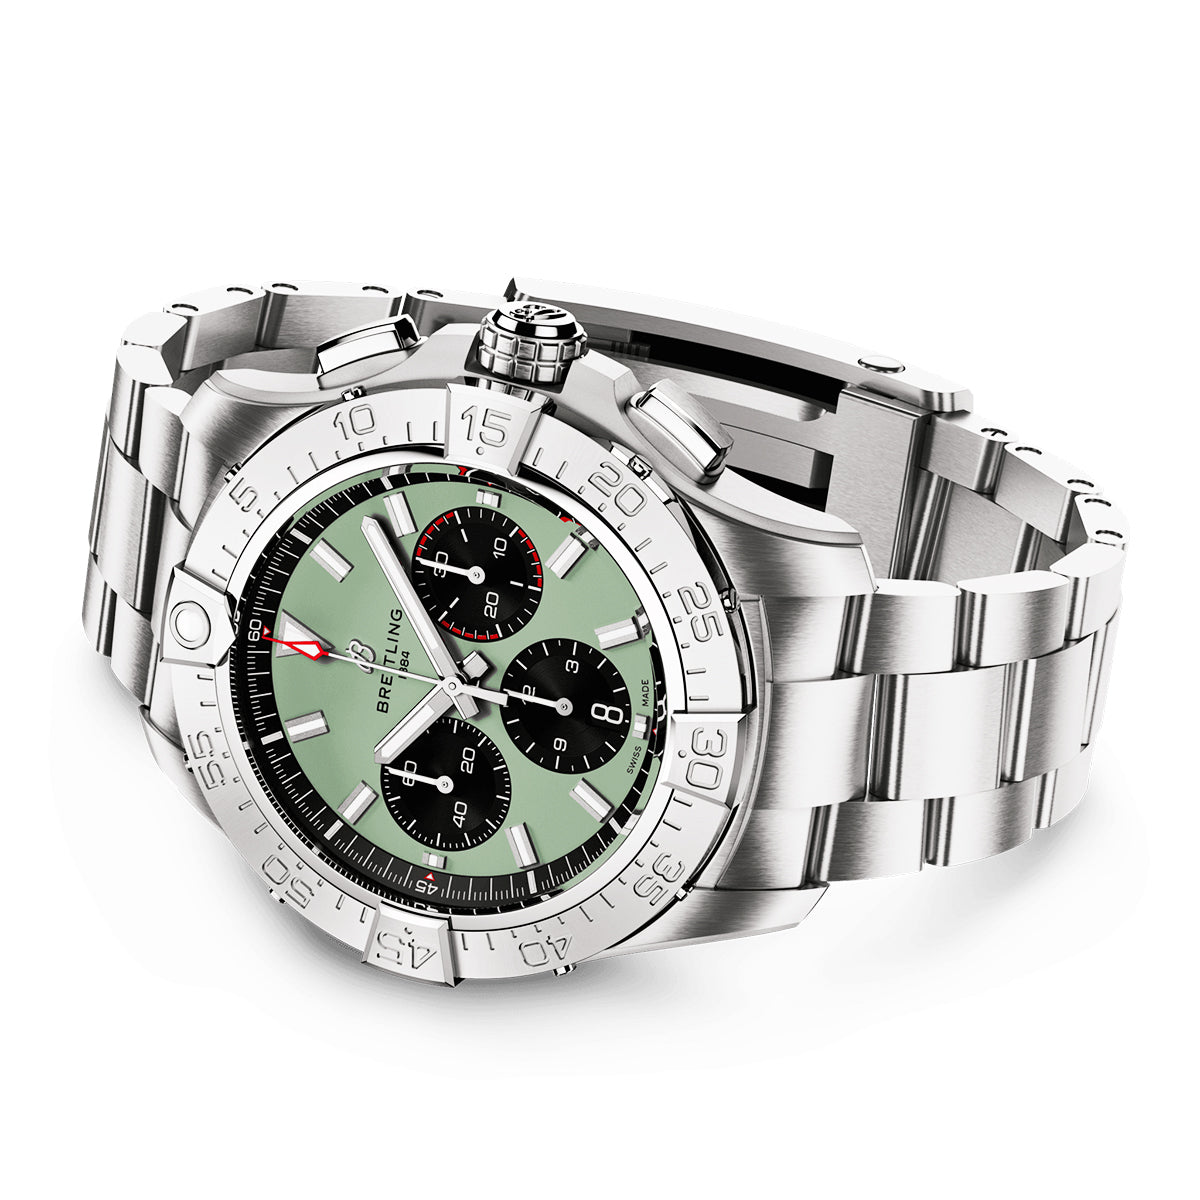 Avenger 44mm Green Dial Automatic Chronograph Bracelet Watch